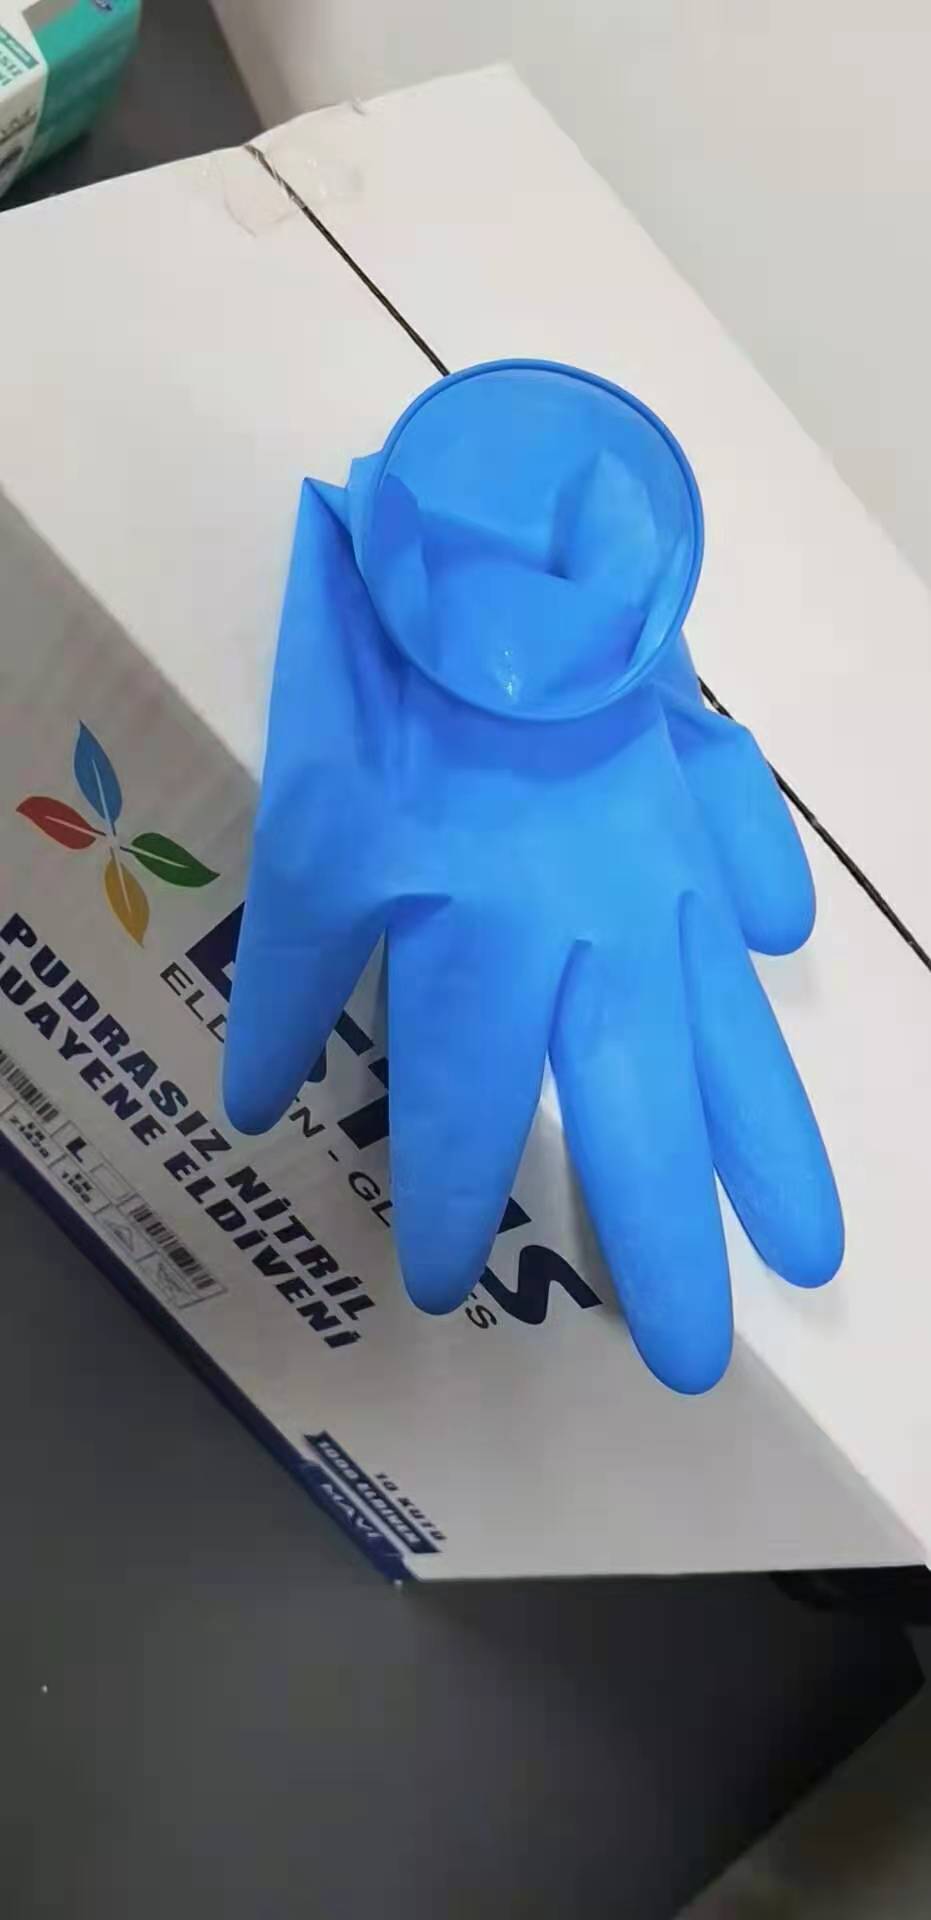 Nitrile glove production line